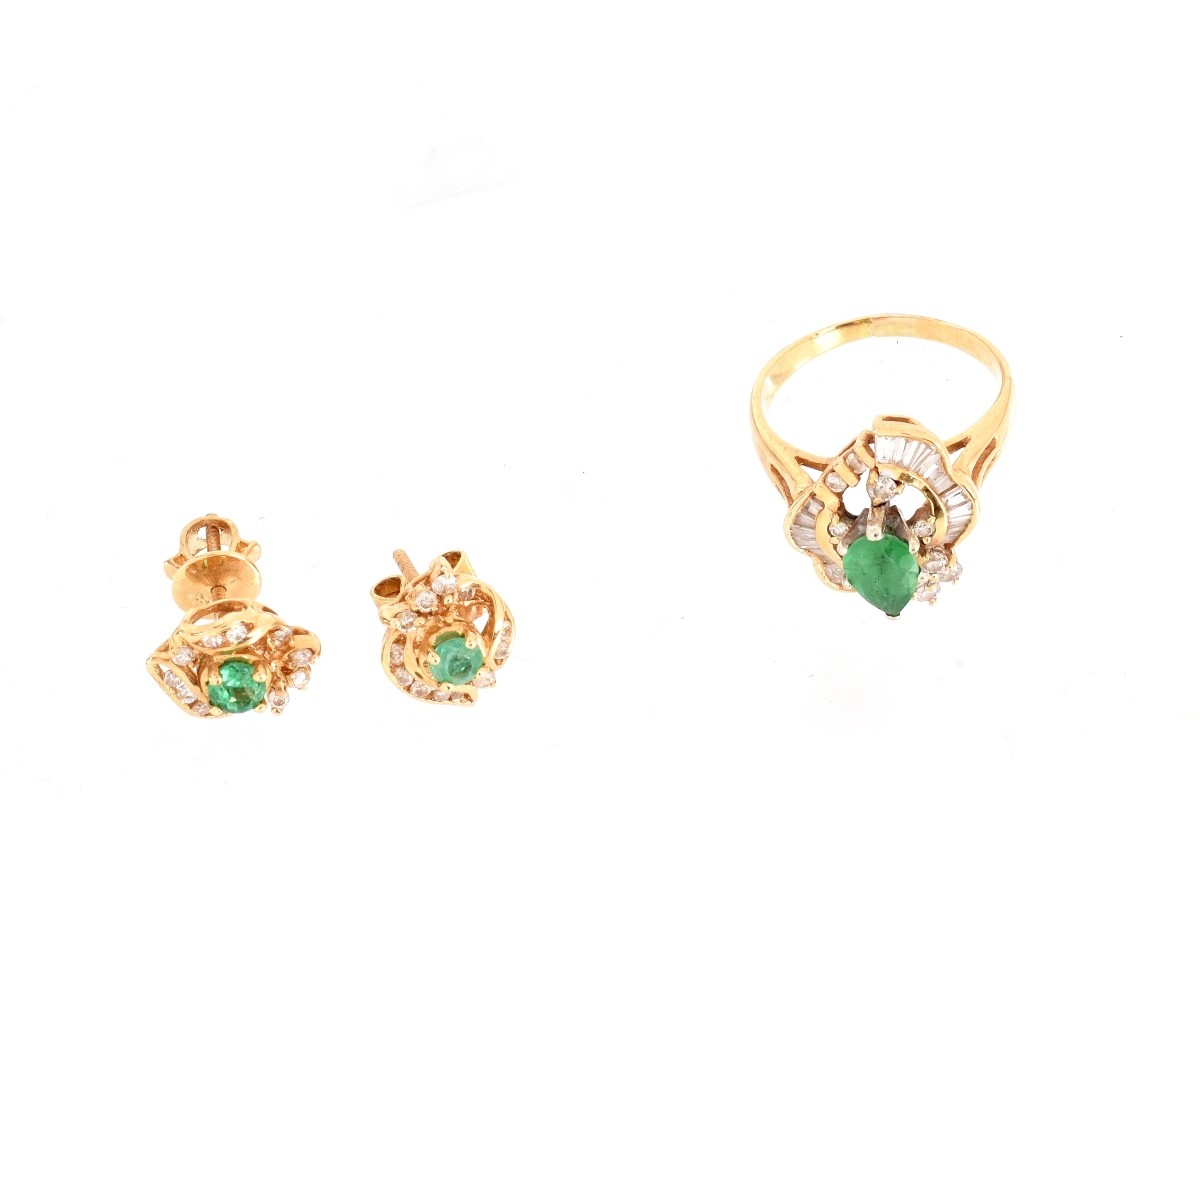 Vintage Emerald and Diamond Jewelry Suite